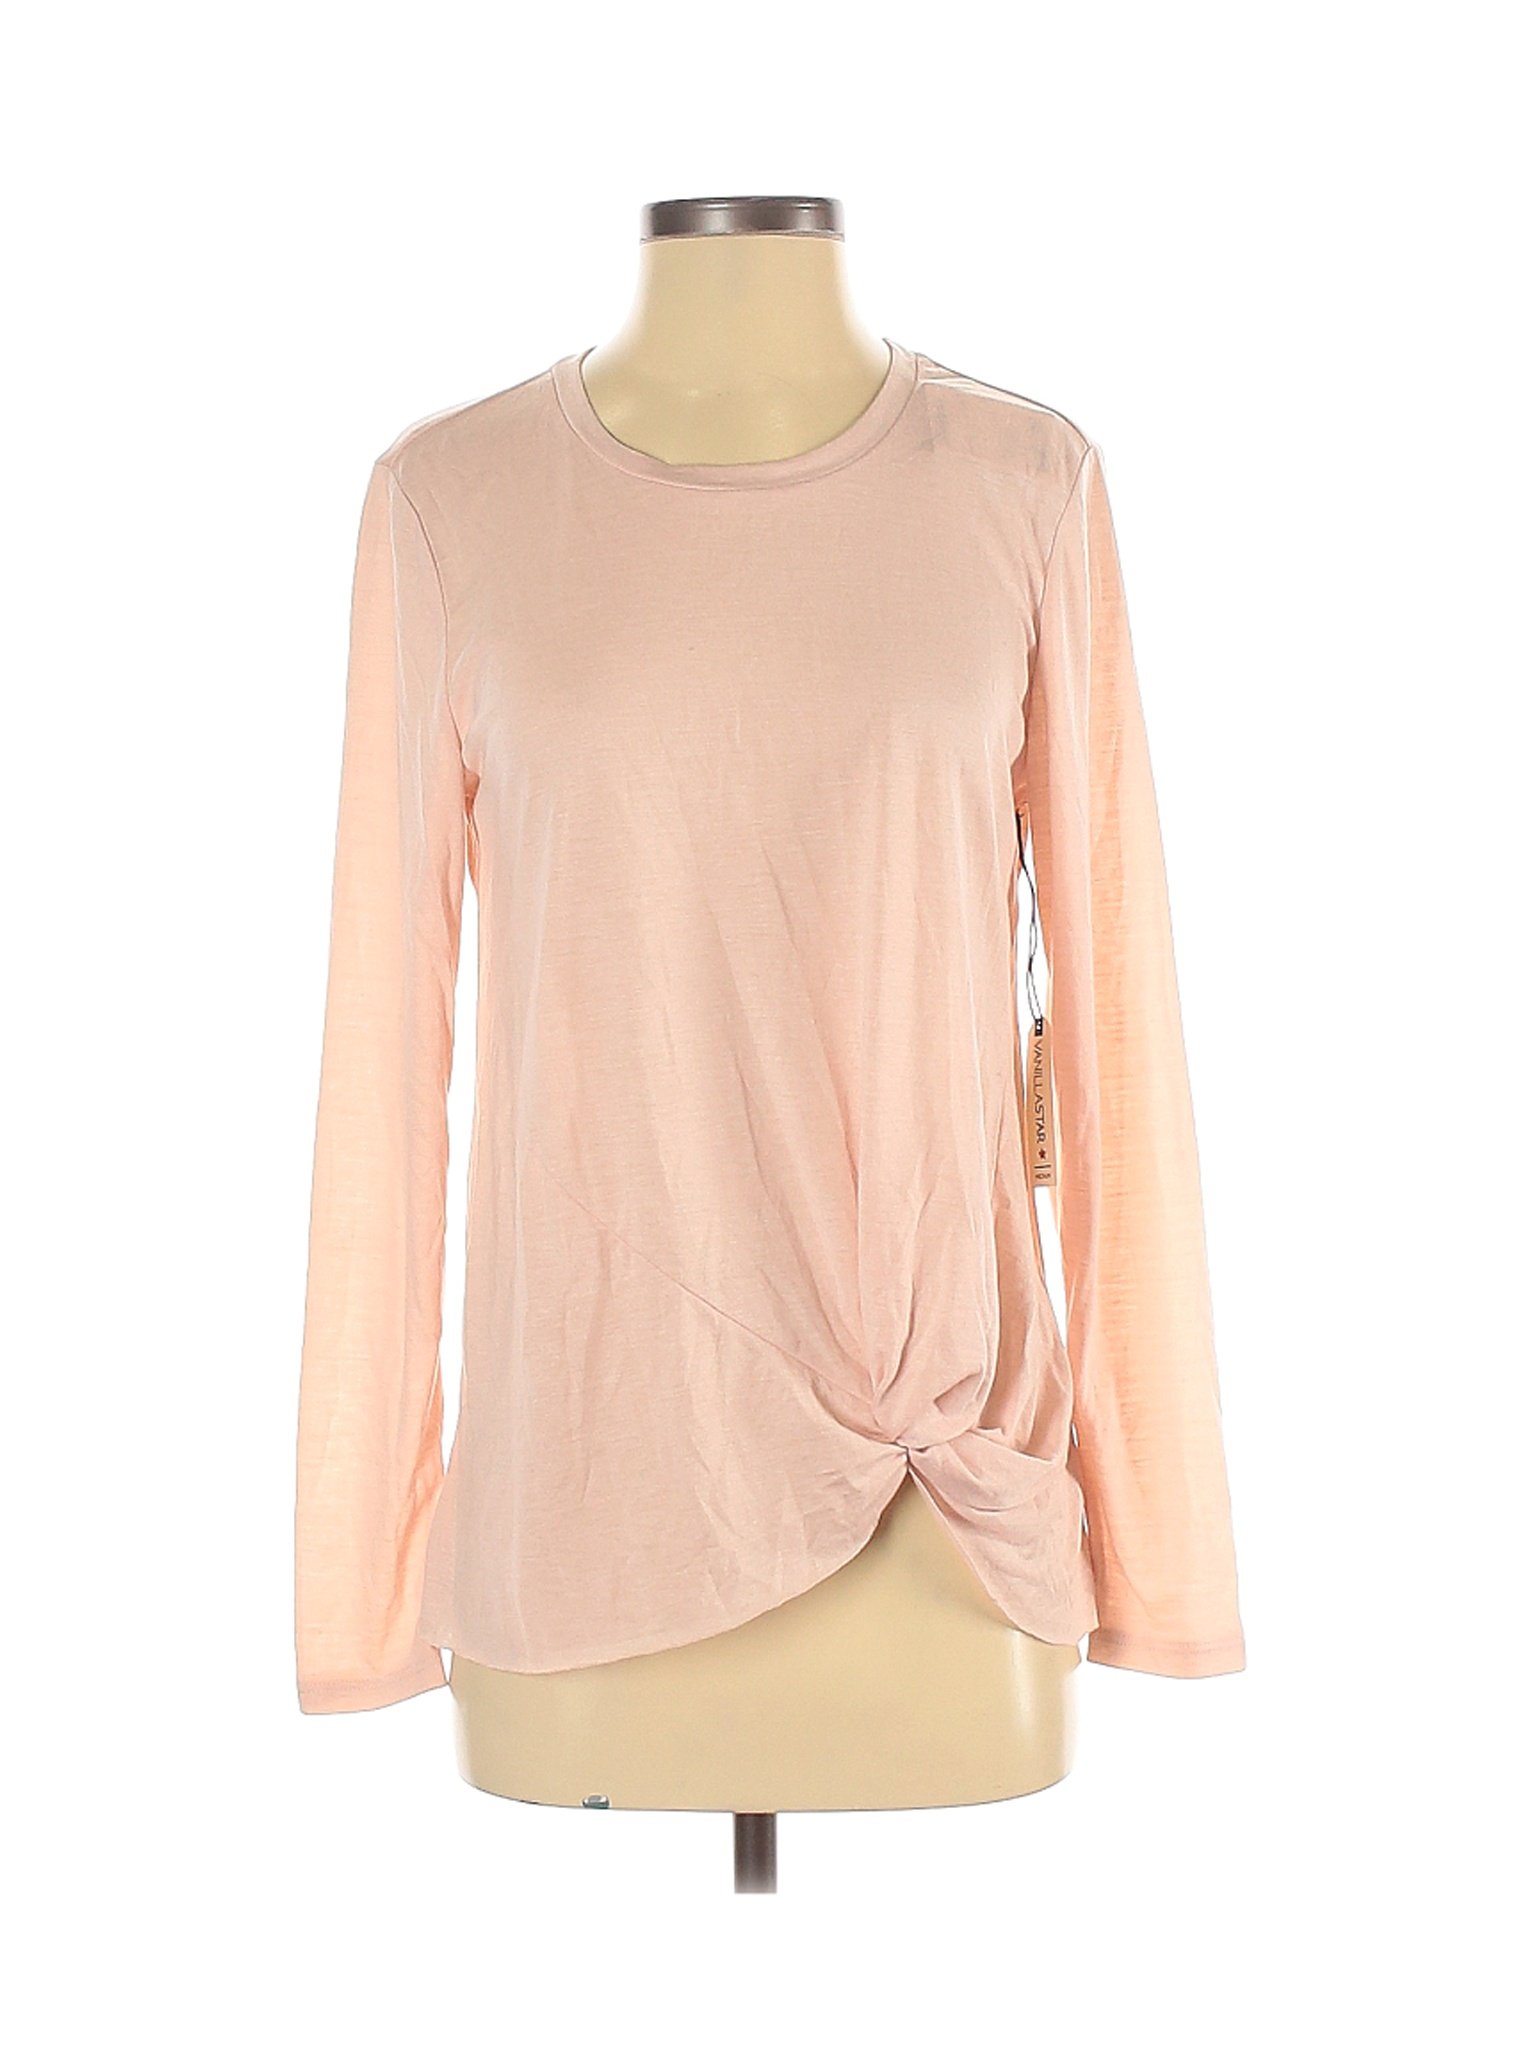 NWT Vanilla Star Women Brown Long Sleeve T-Shirt M | eBay